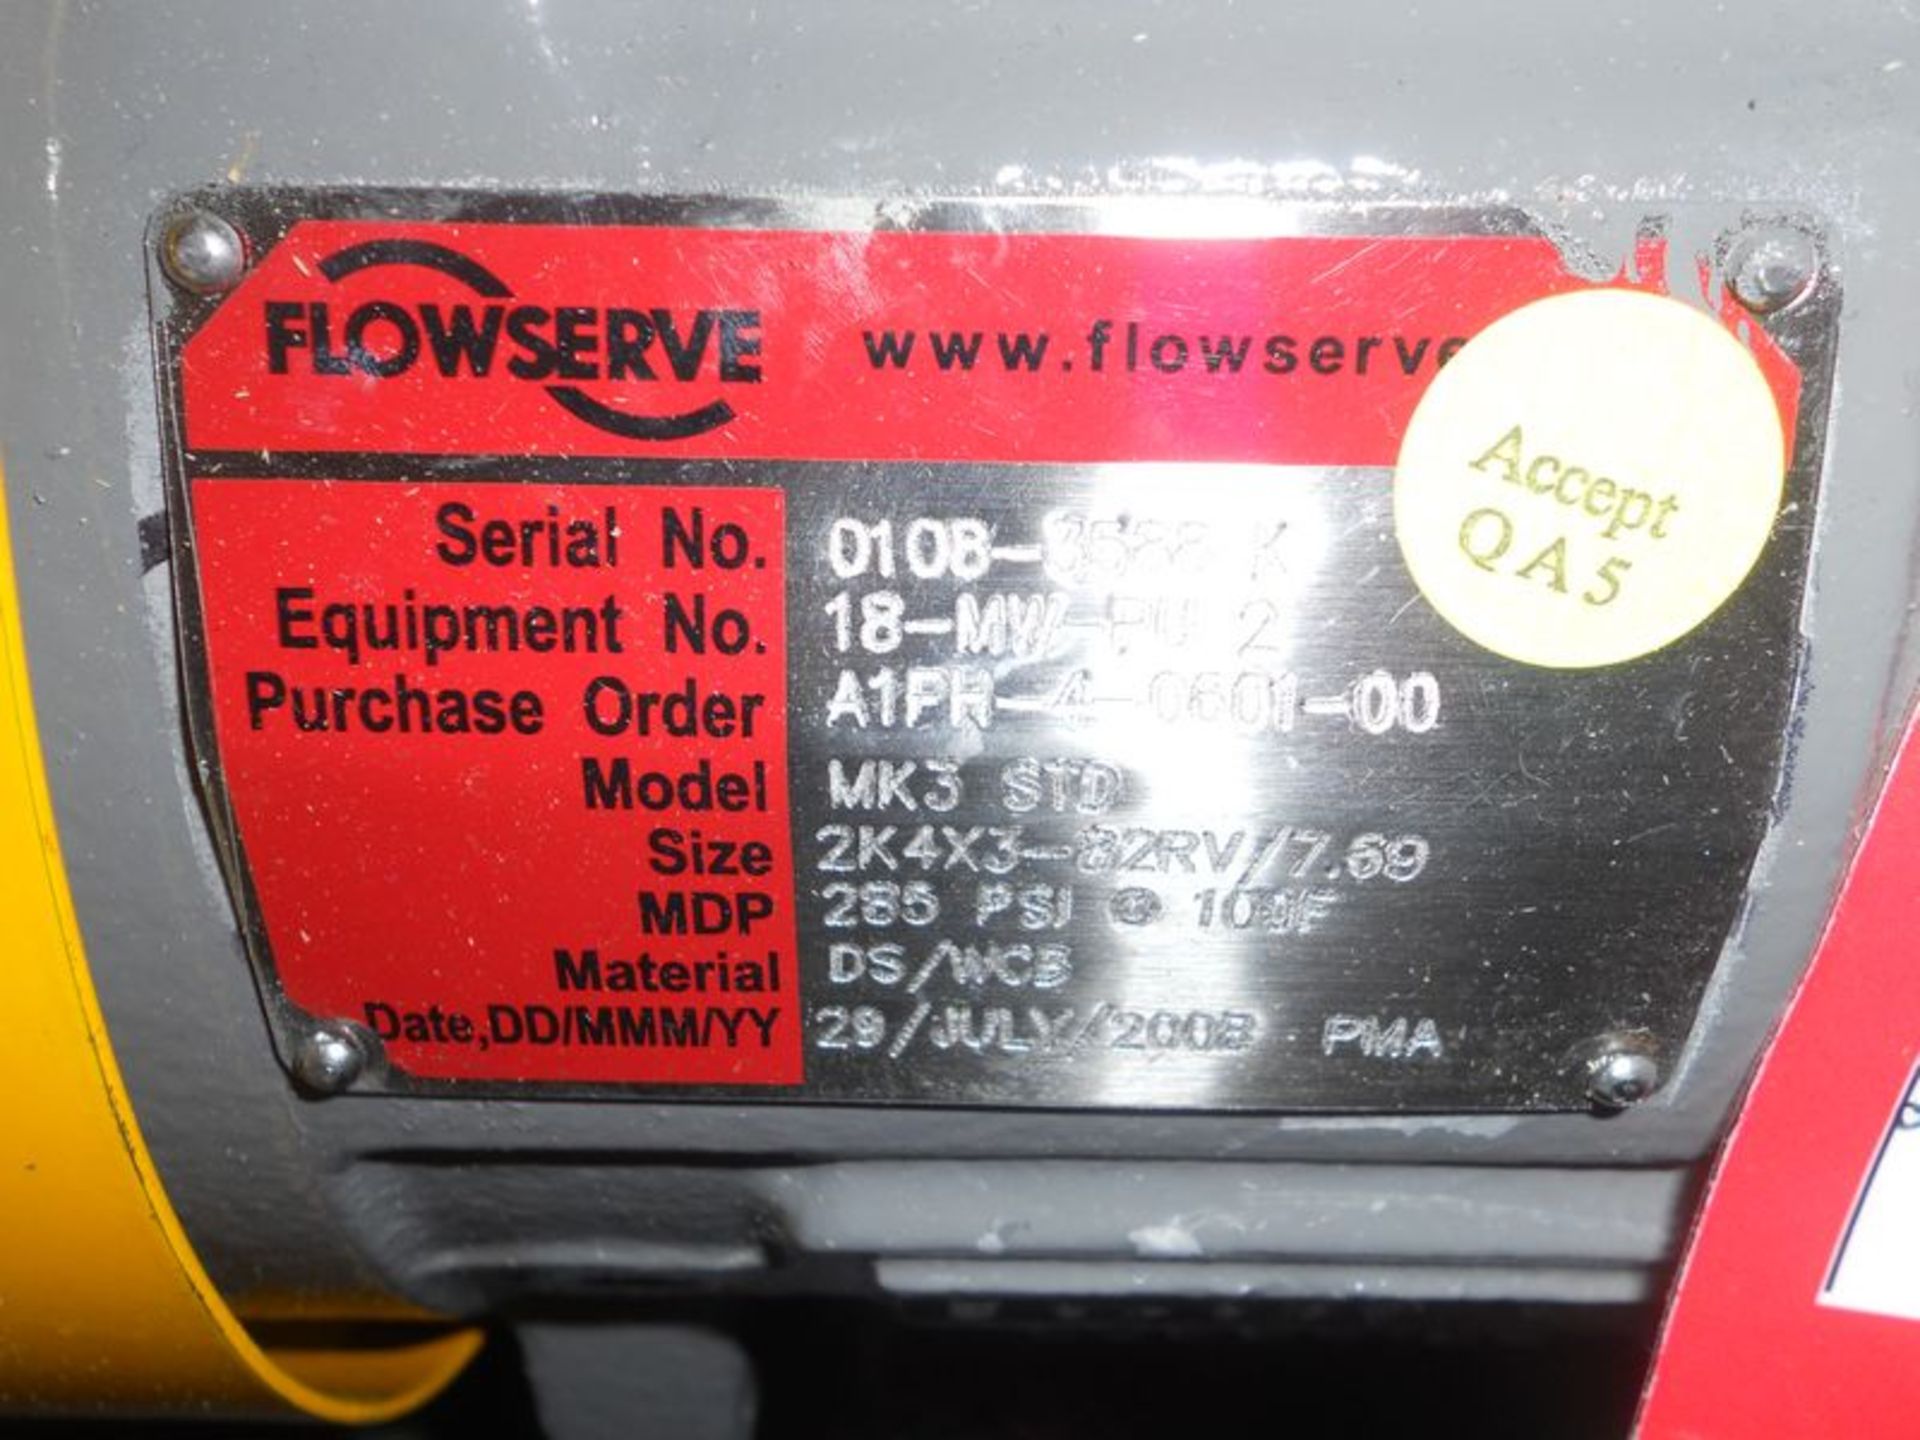 FlowServe MK3 STD centrifugal pump, S/N 0108-3590-F, 4" X 3", 60 HP, MDP 285 psi @ 100 DegF, Size - Image 5 of 6